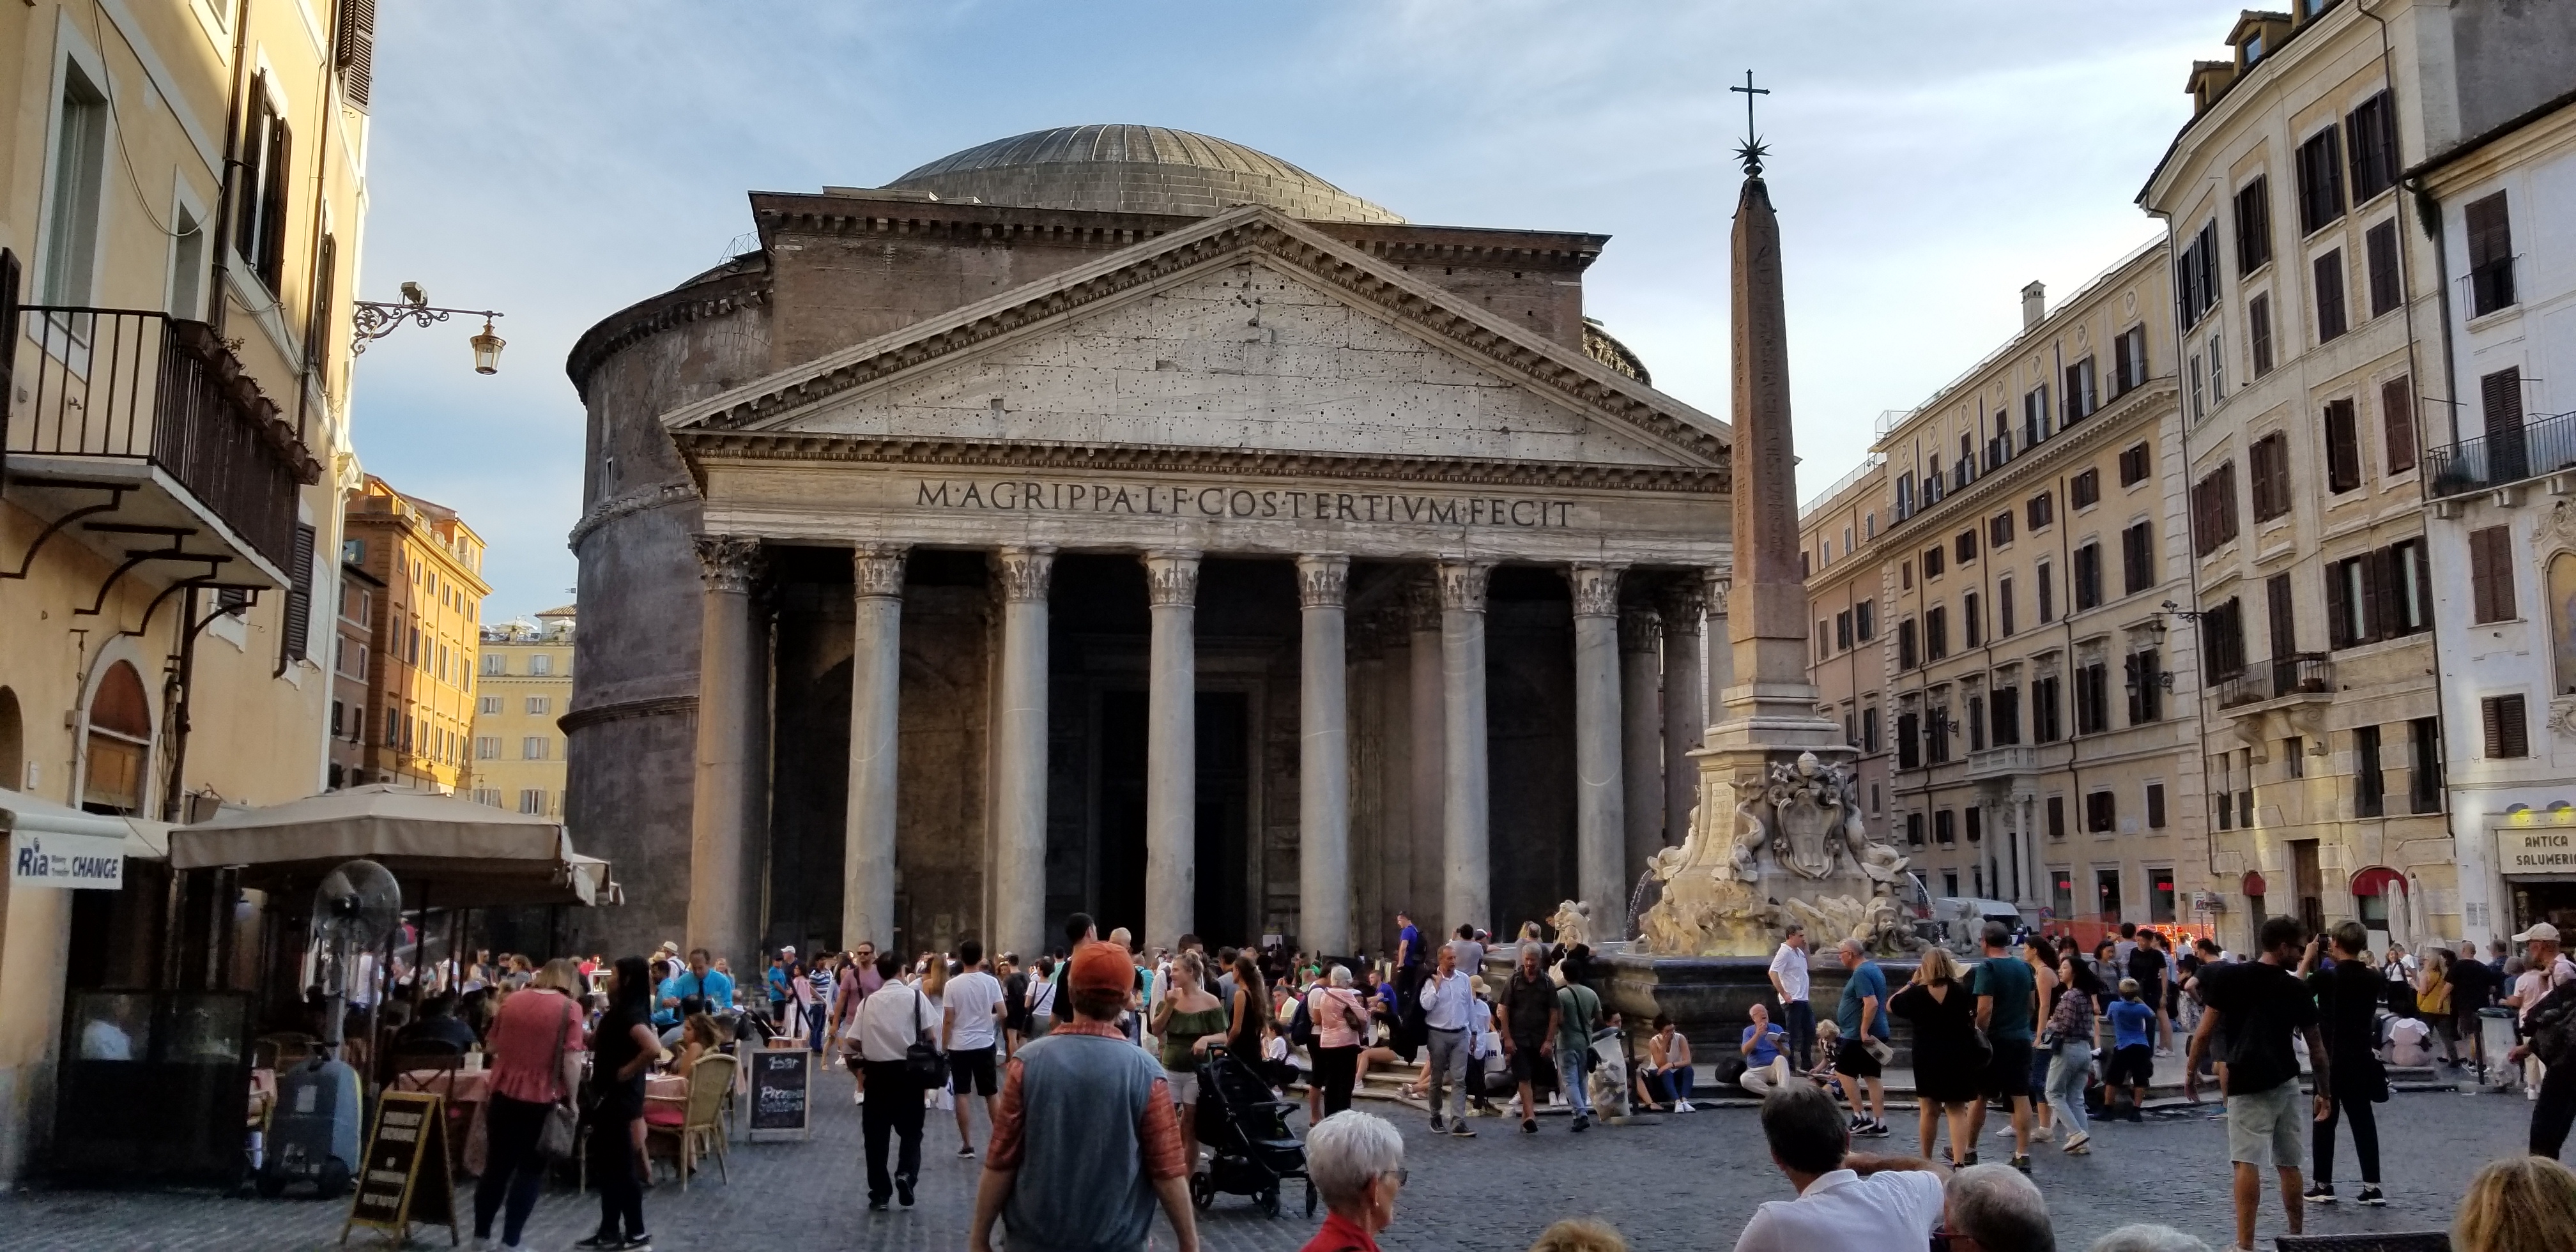 Pantheon, Rome - Senior Trip to Rome